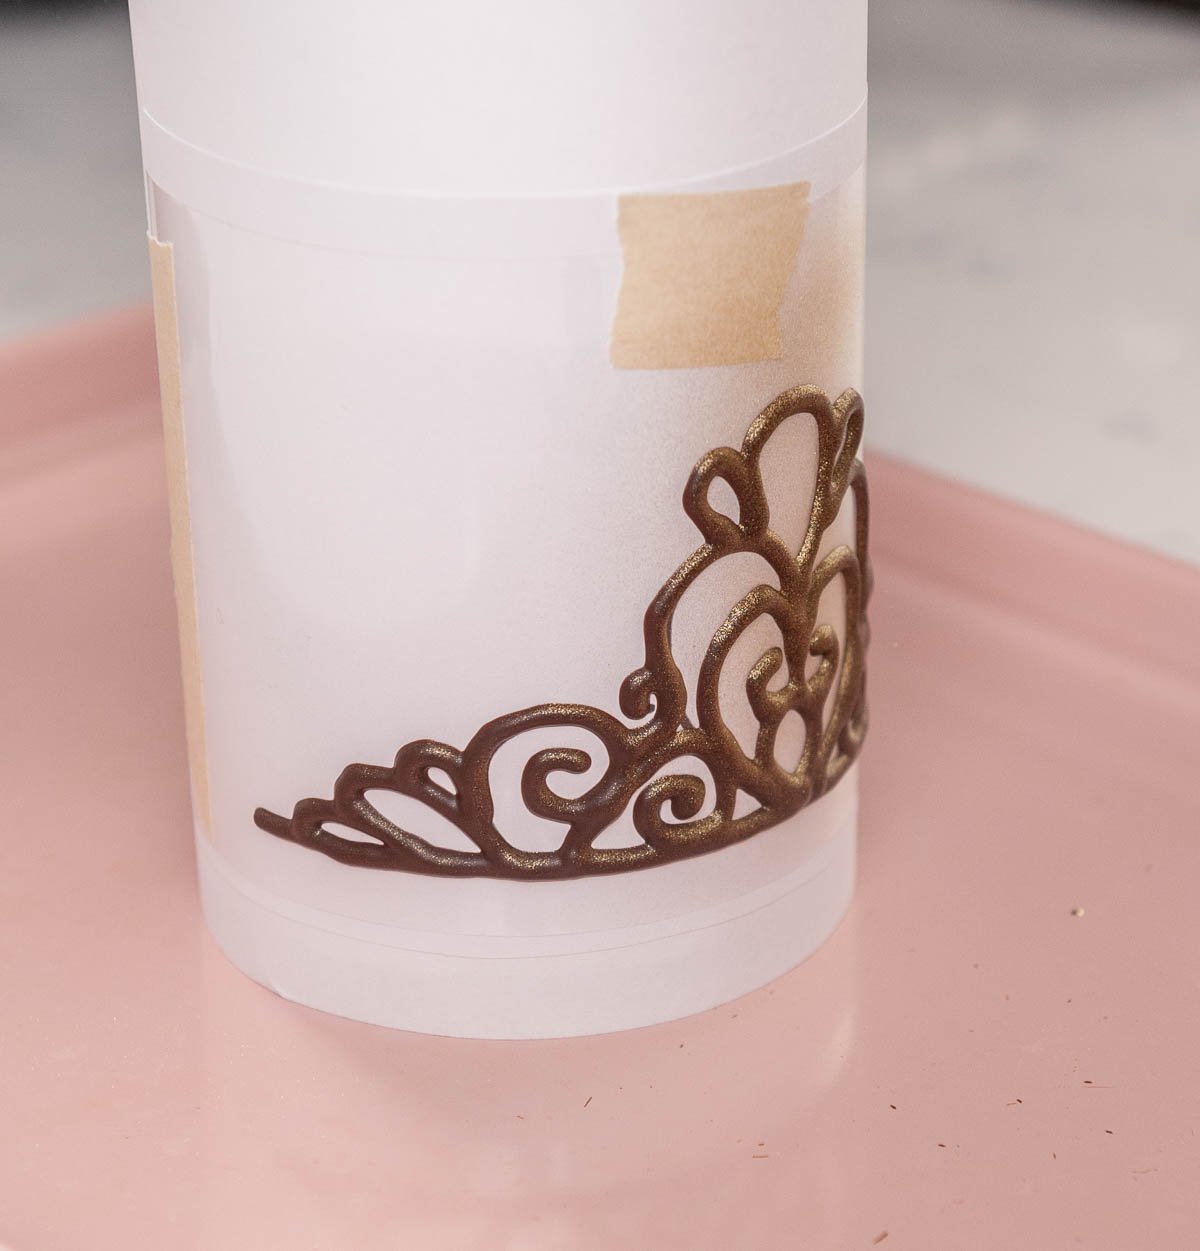 taping the chocolate tiara to a styrofoam dummy